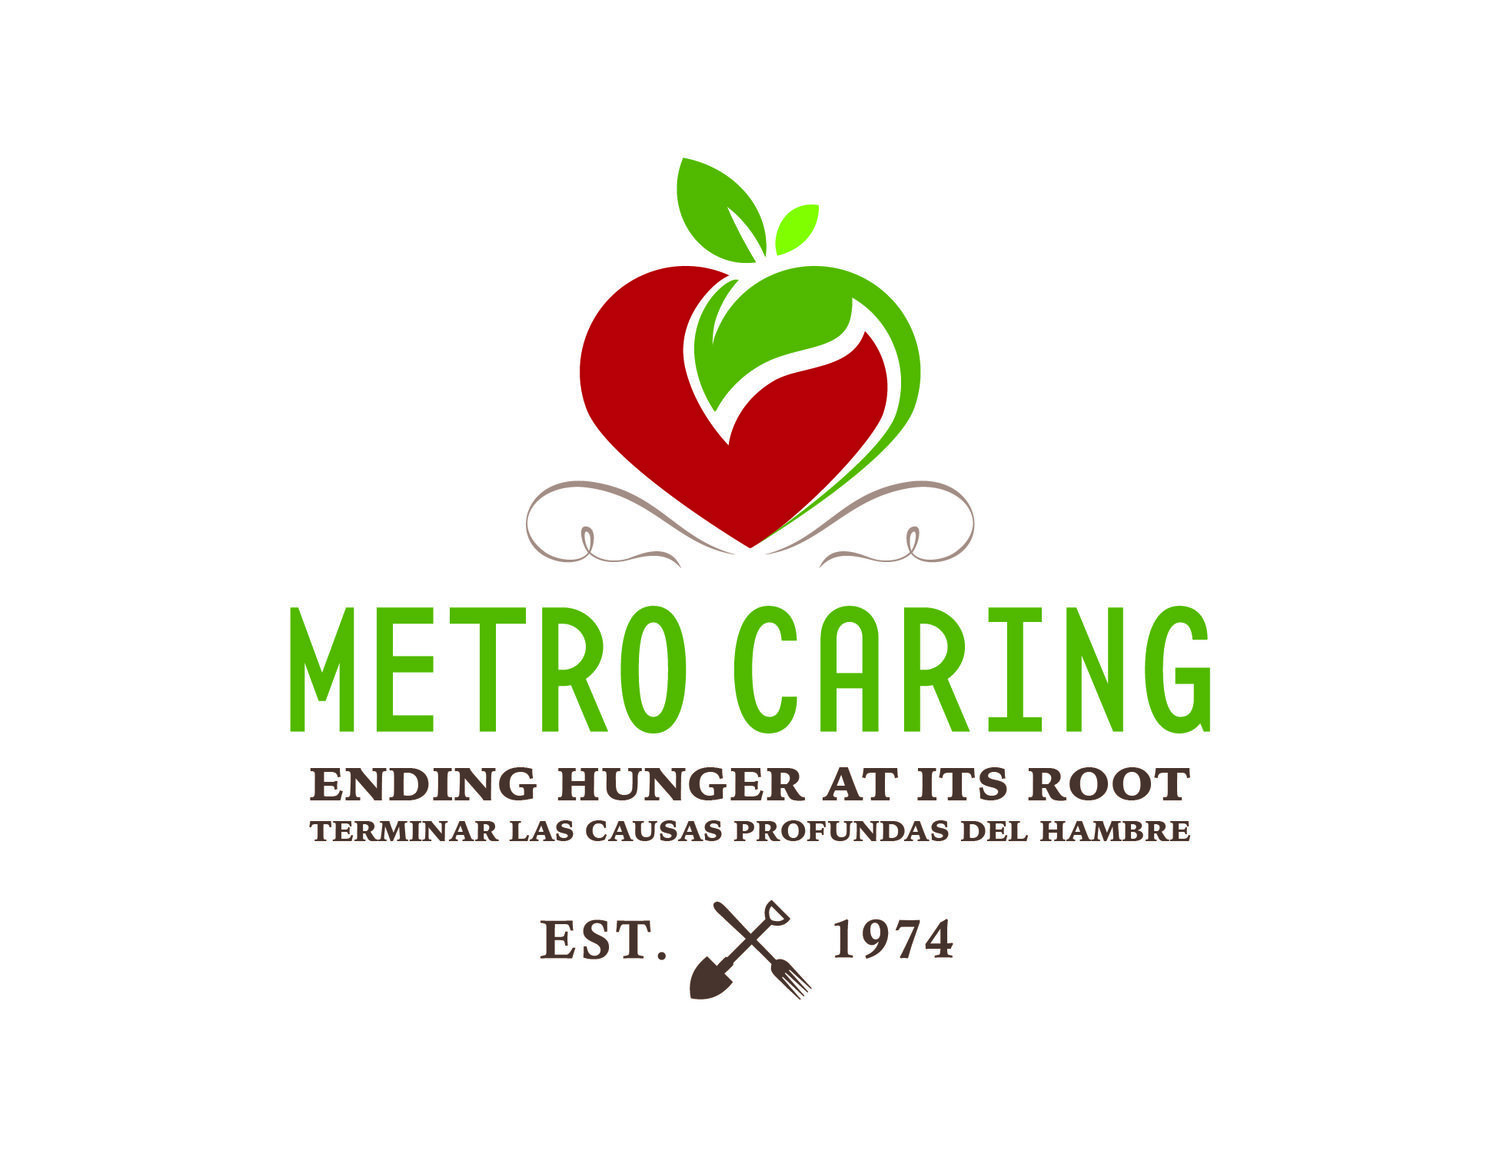 MetroCaring_Logo_tag_engspanish_vert_clr.jpeg